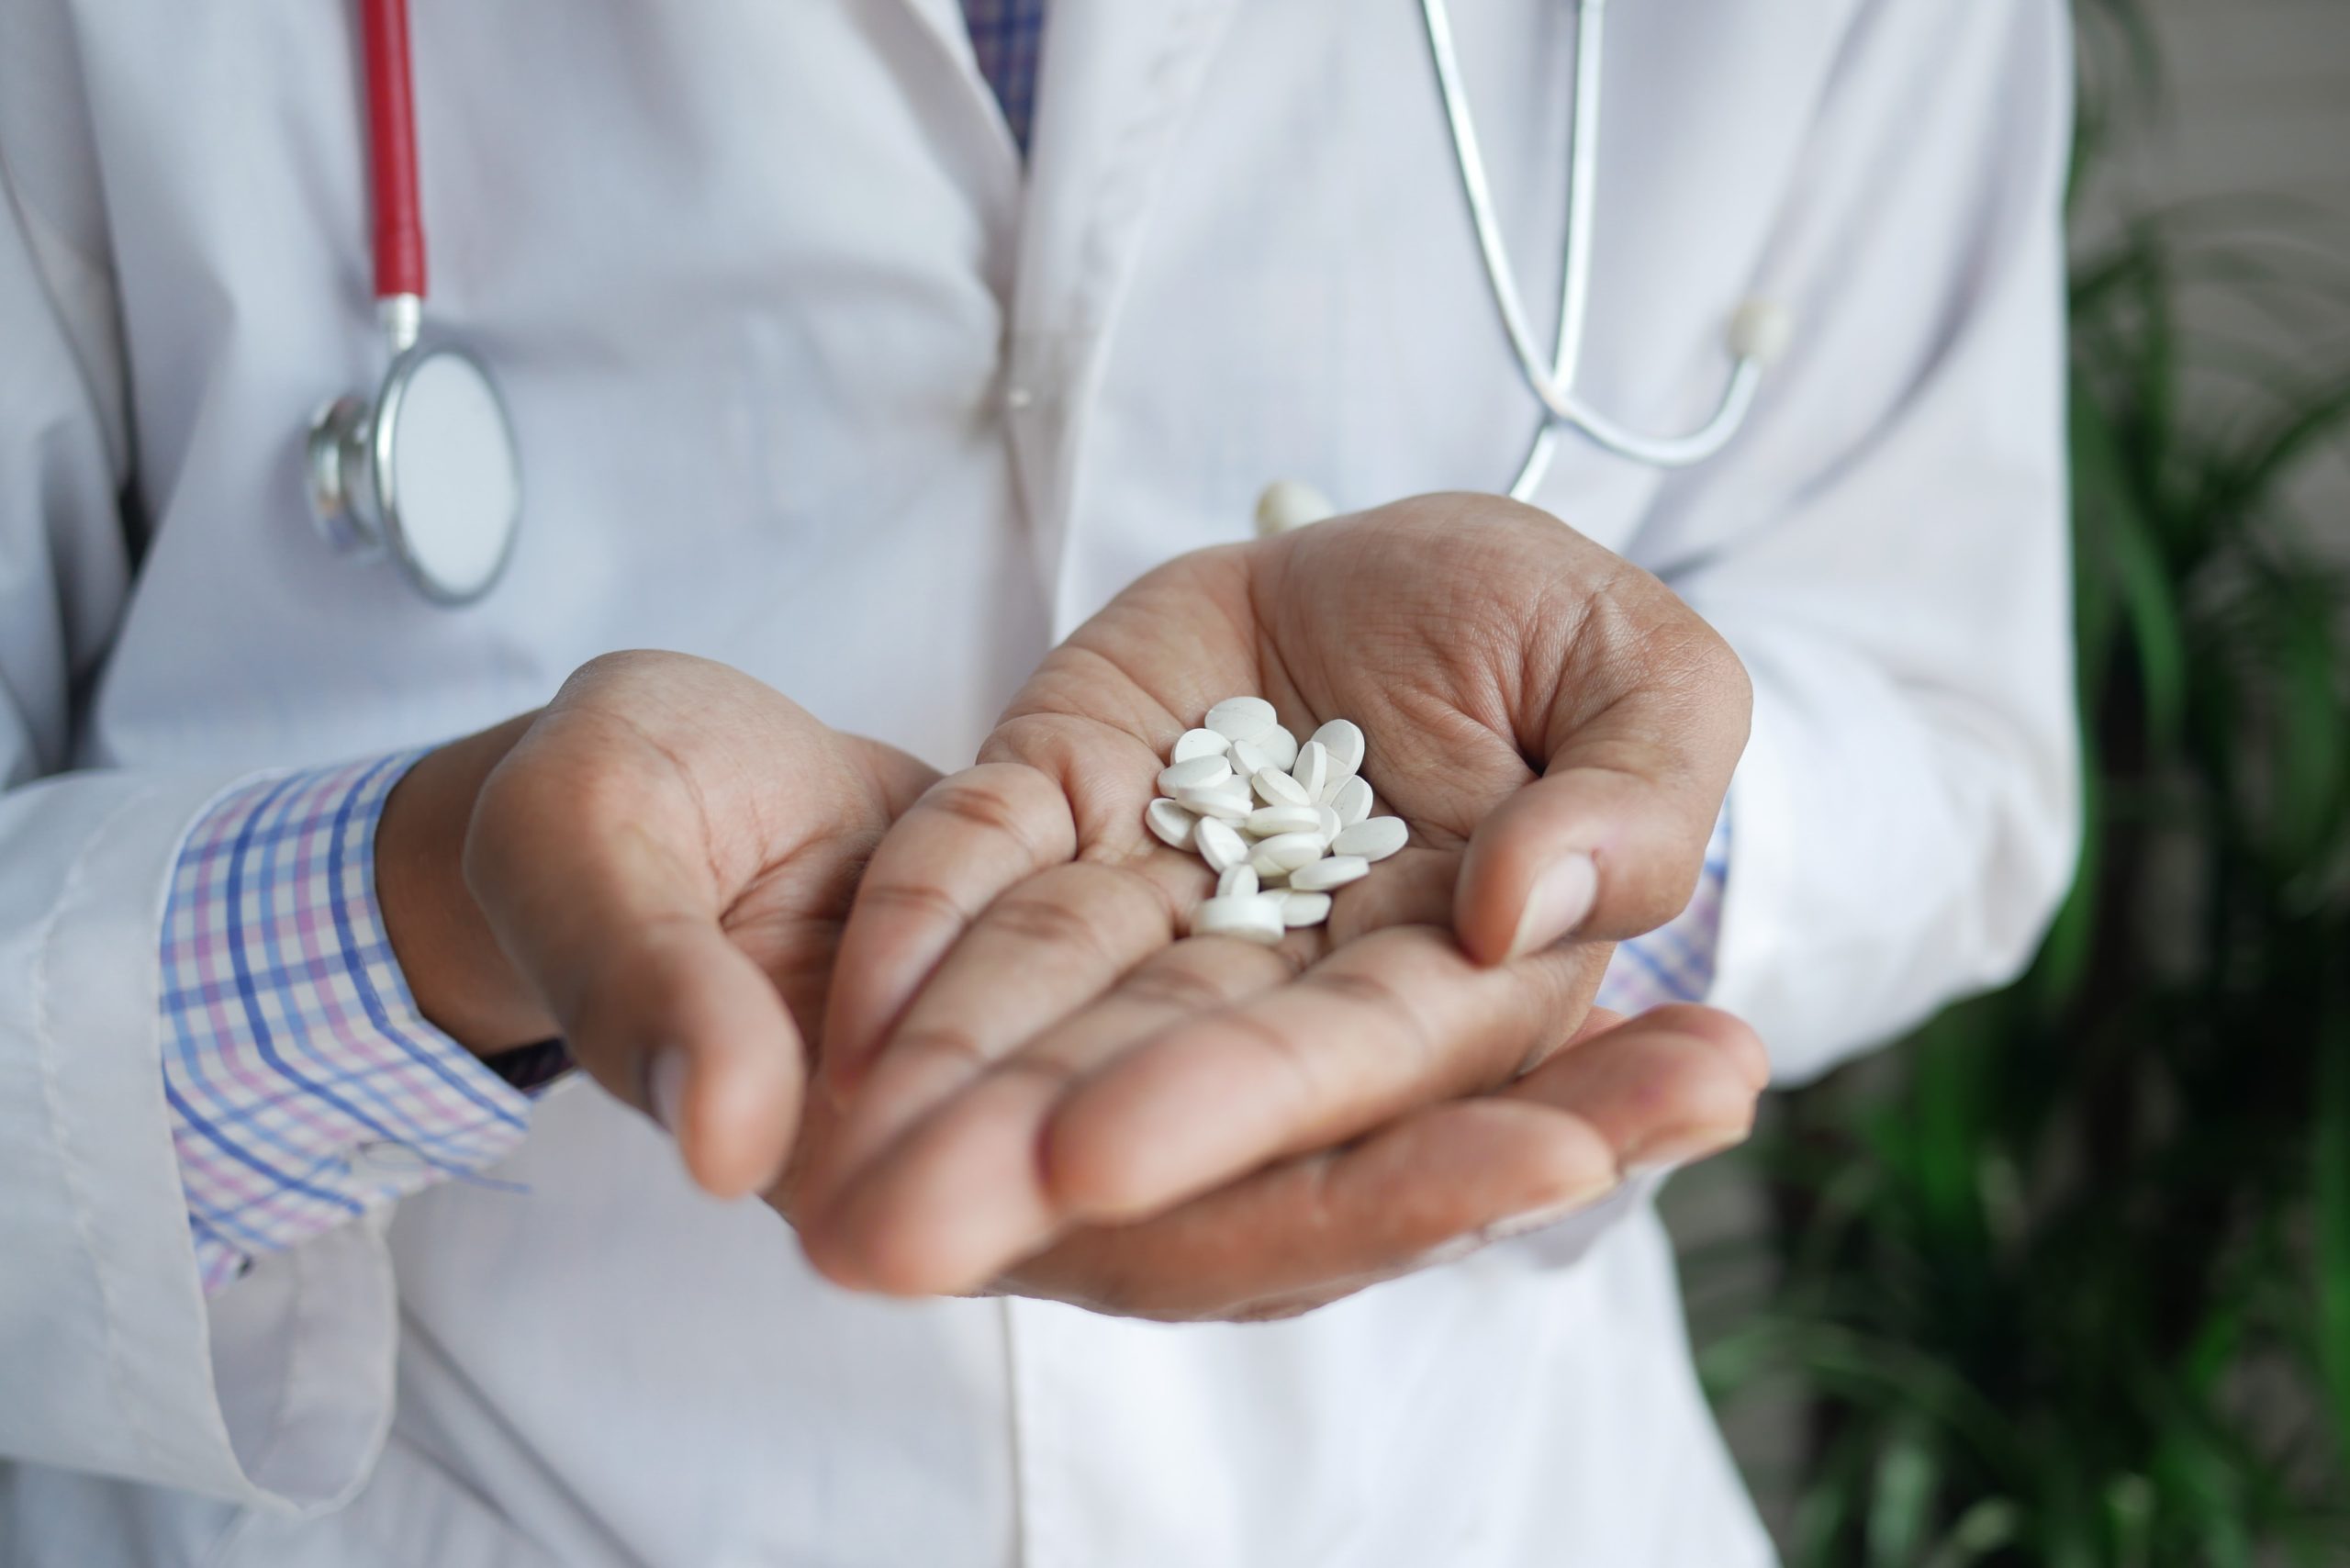 doctor holding several white gabapentin pills in the palm of hand